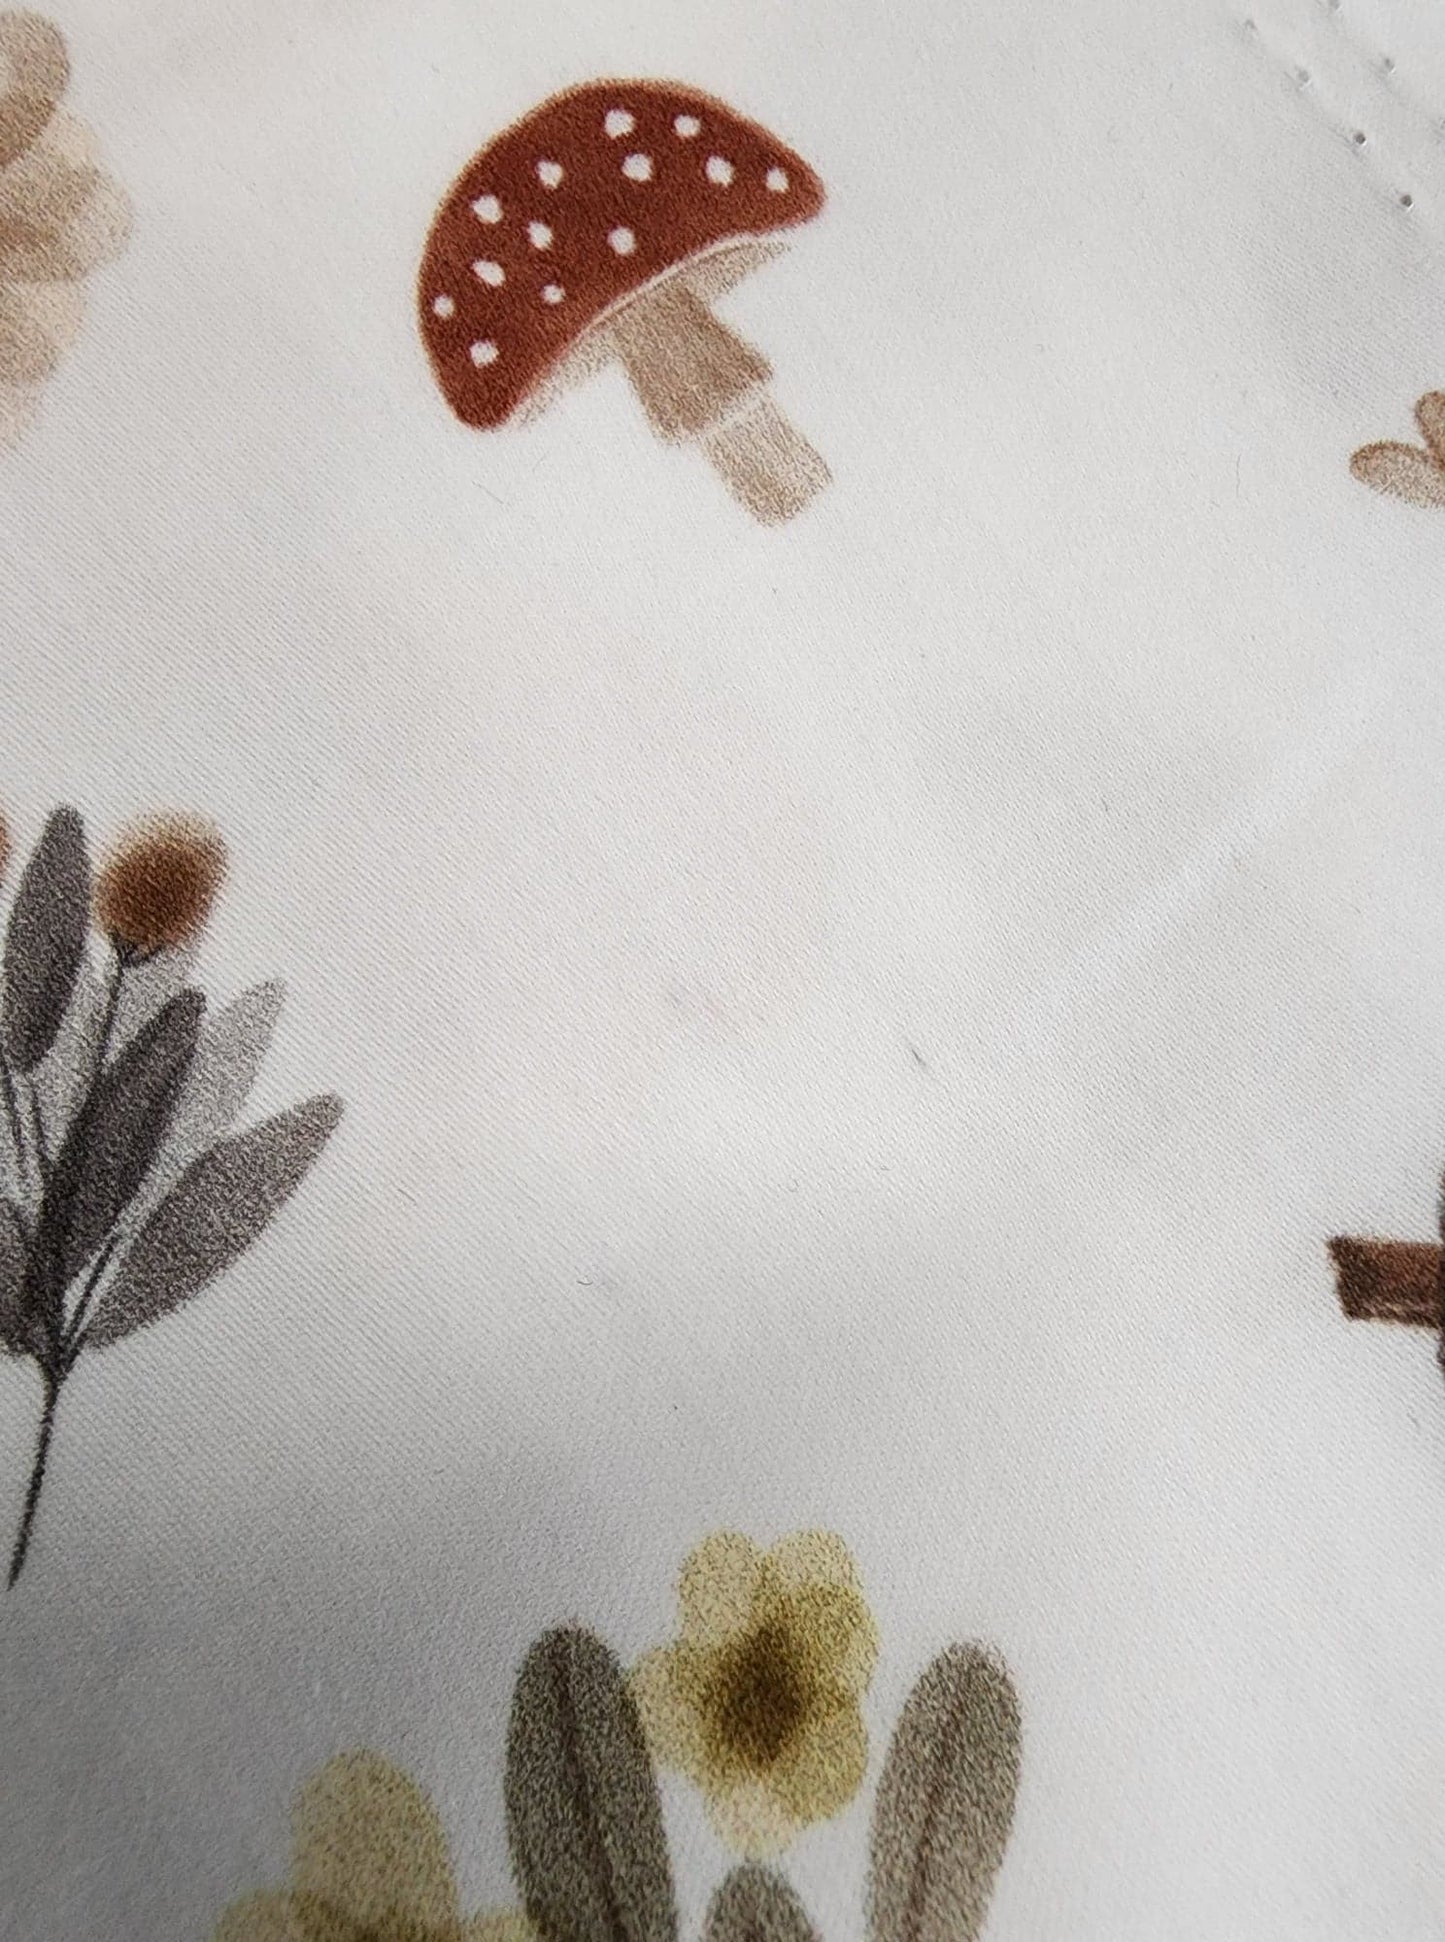 Woodland Wonderland 3 Inch *Seconds* - 100% Cotton Woven Fabric